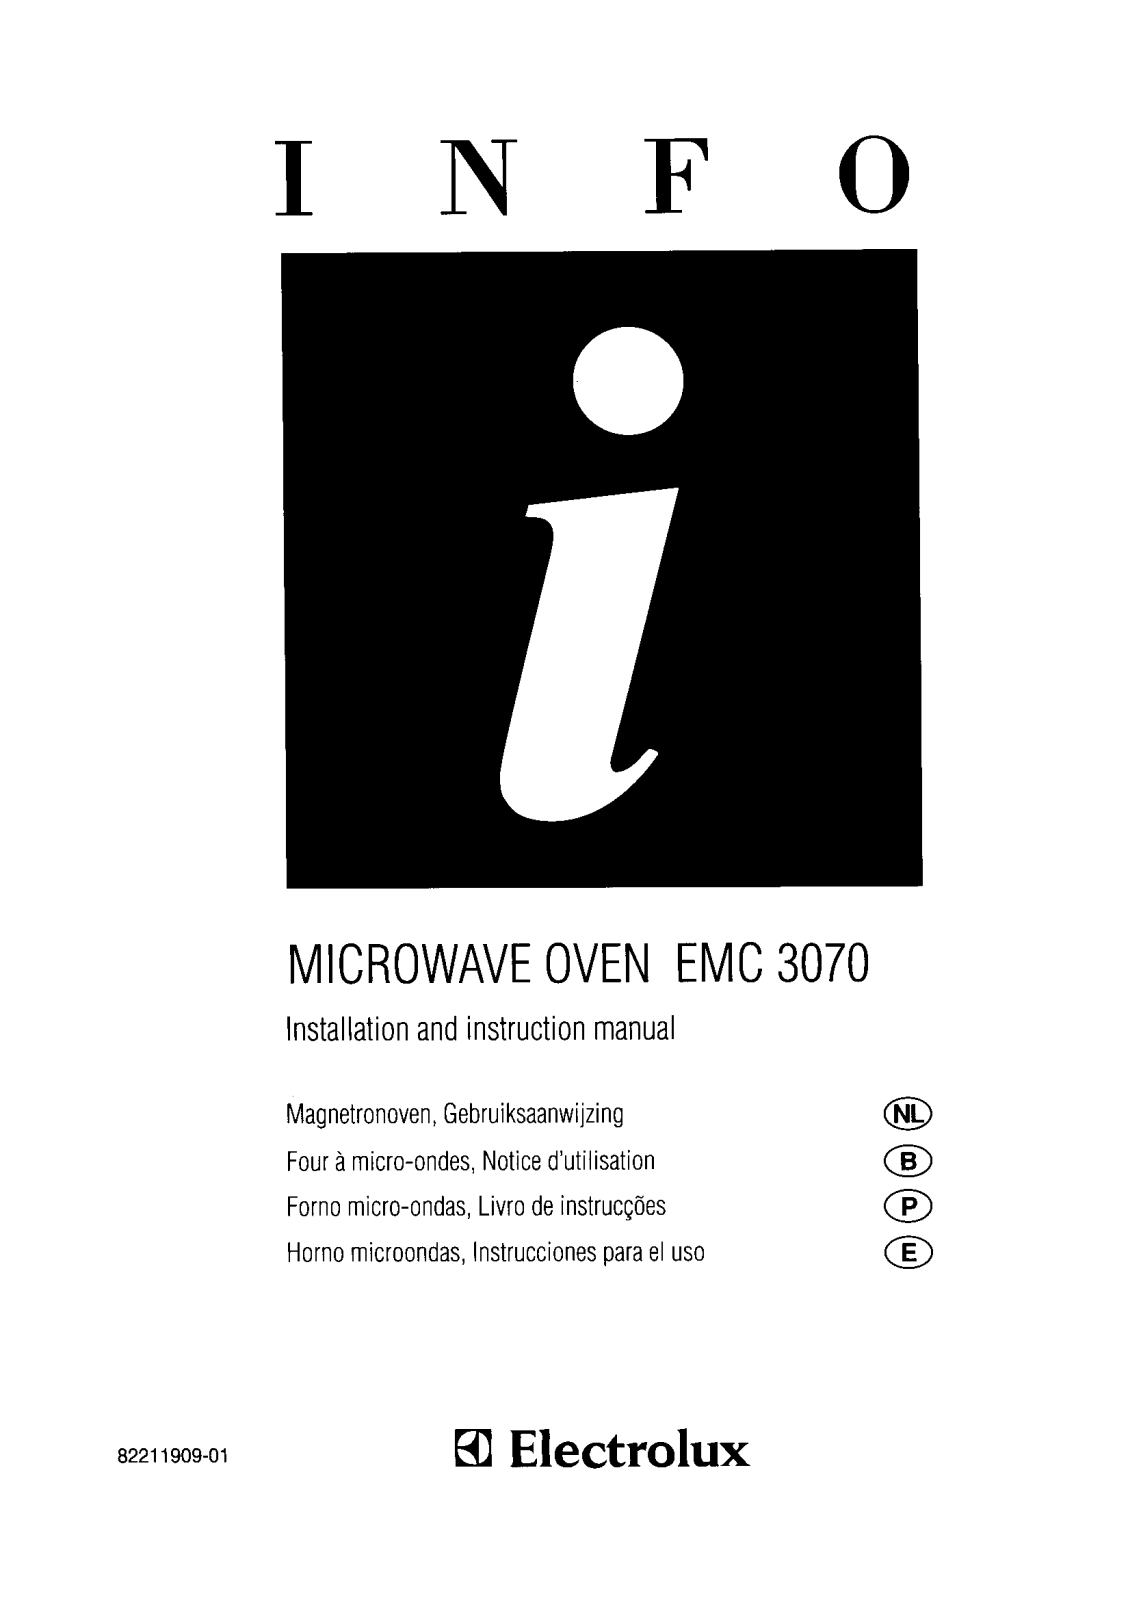 electrolux EMC 3070 Instructions Manual